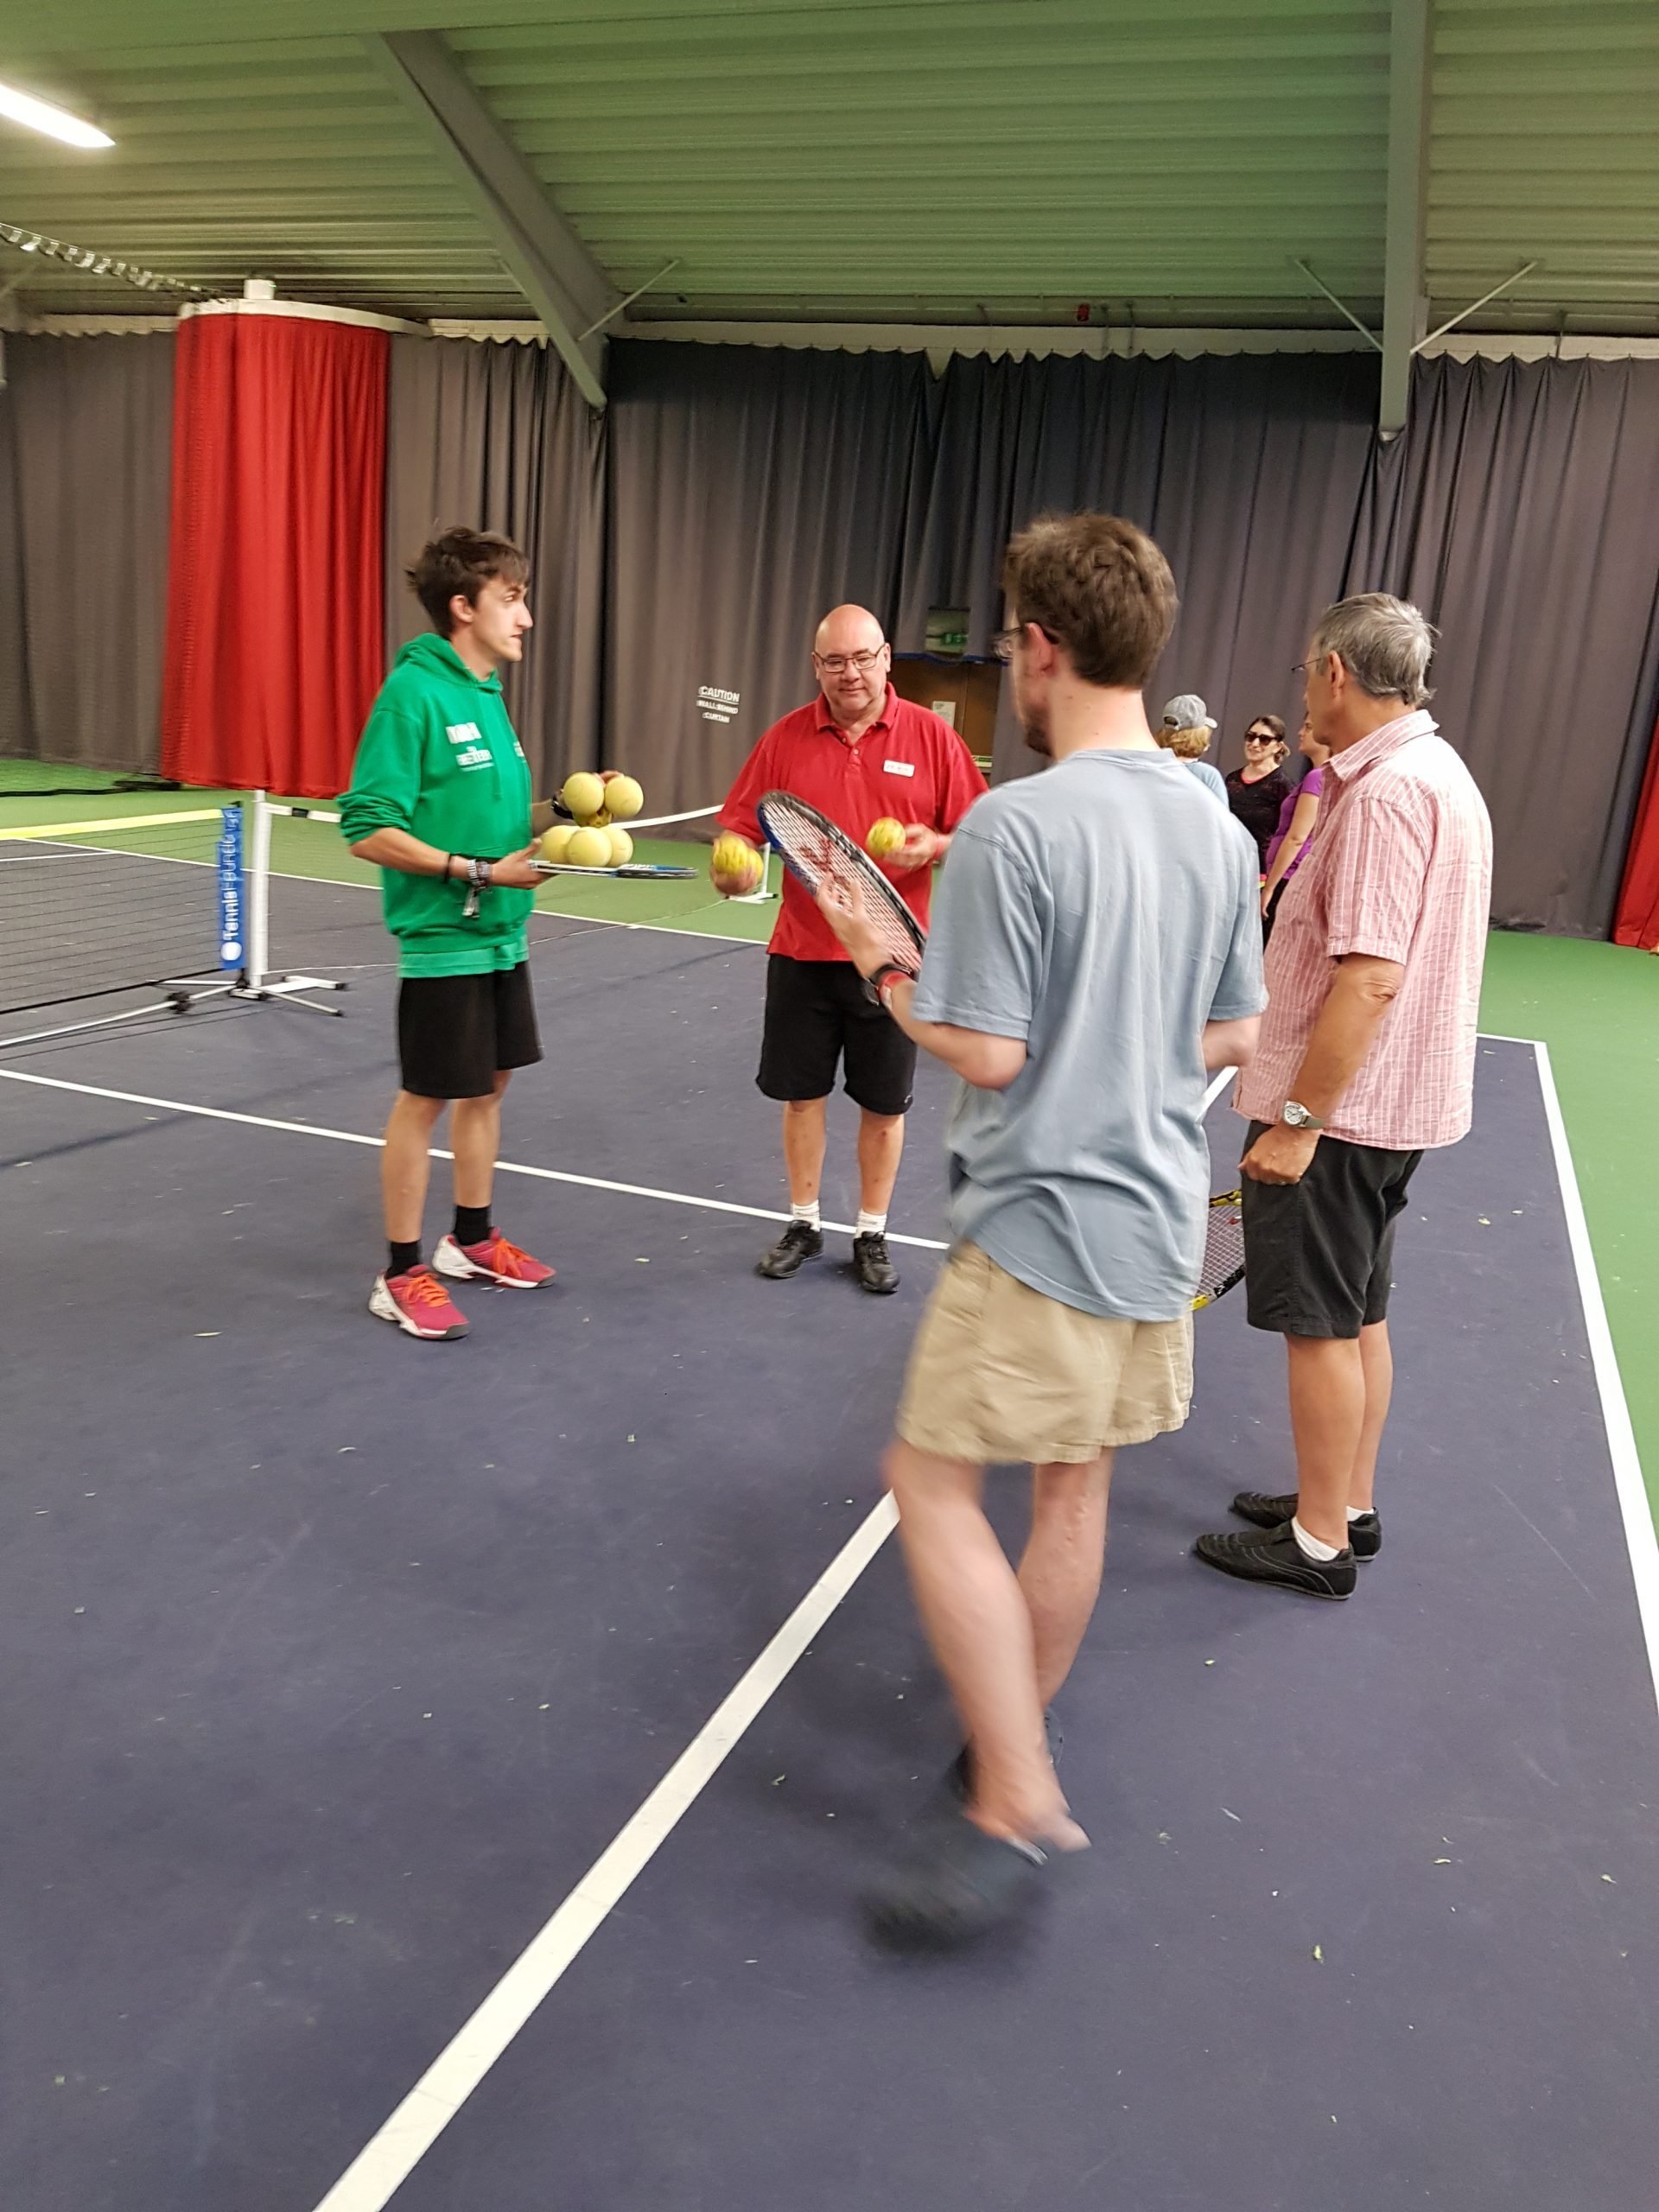 VI Tennis session